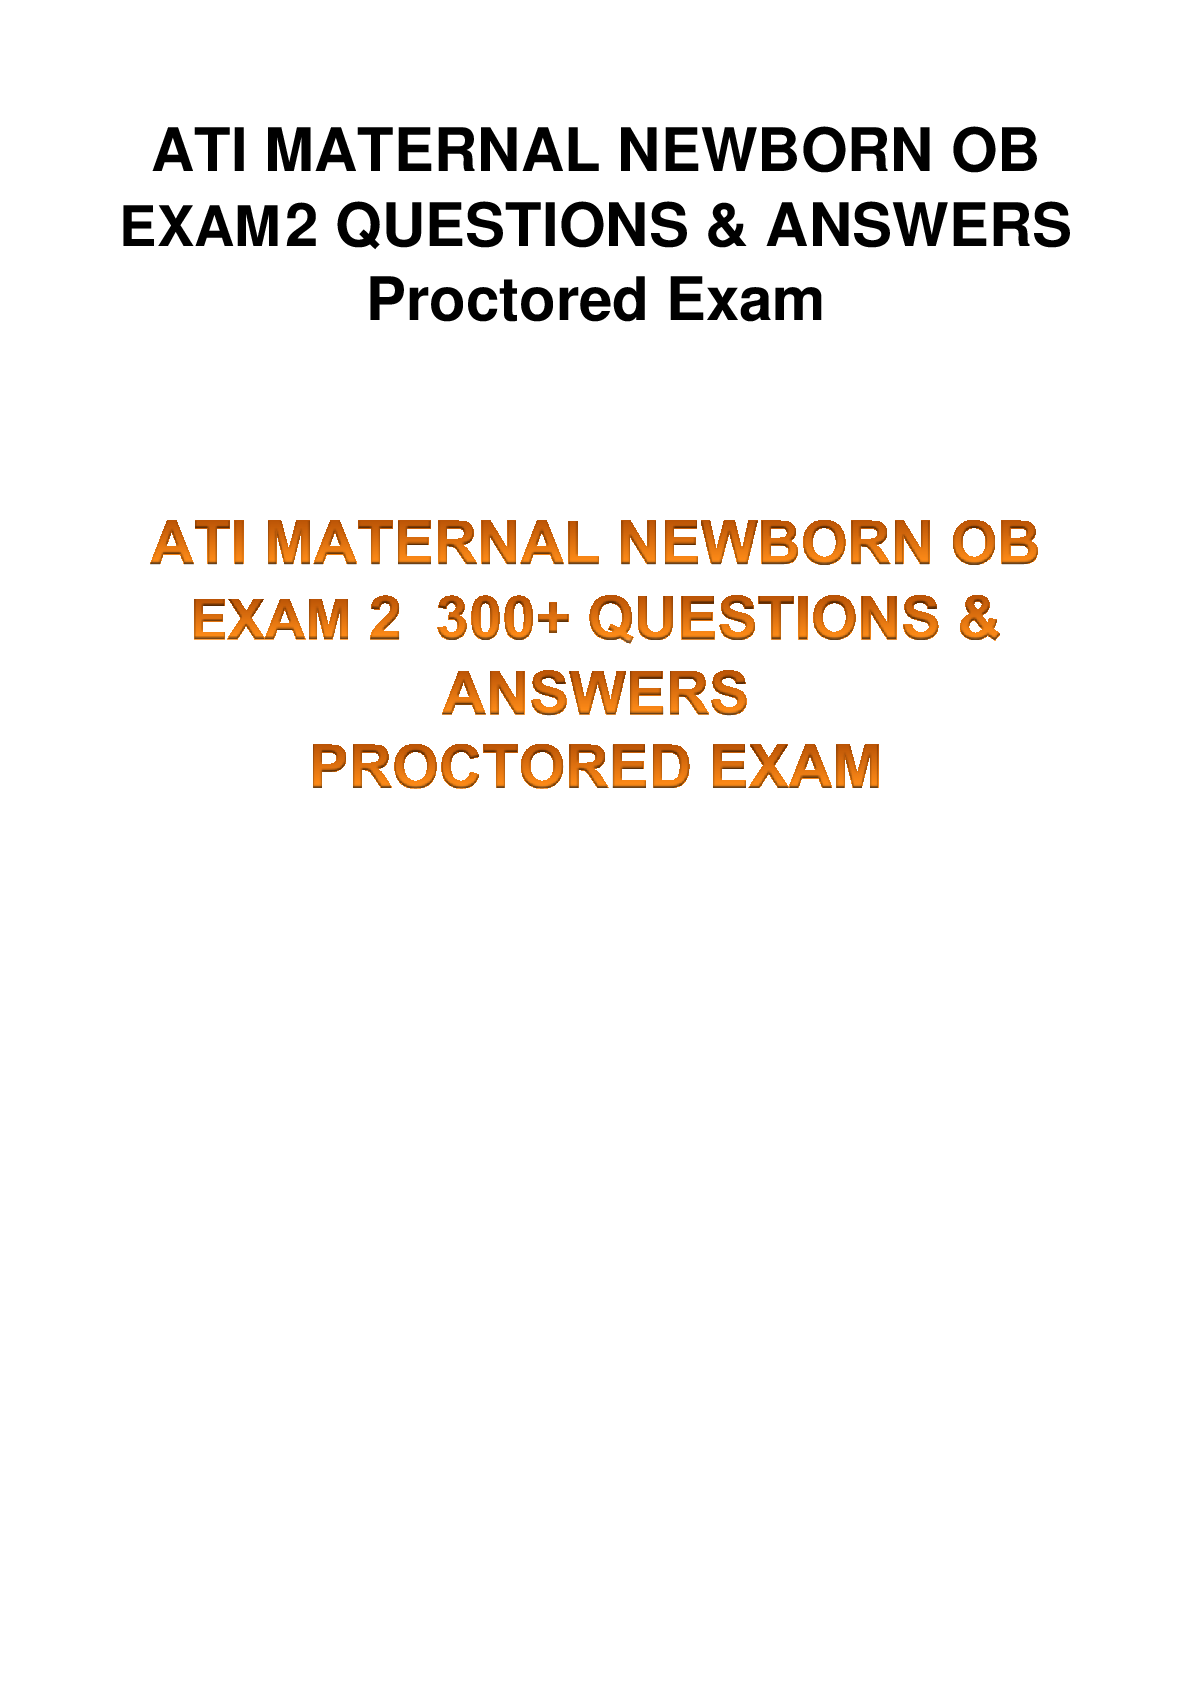 ATI MATERNAL NEWBORN OB EXAM 2 QUESTIONS & ANSWERS Proctored Exam